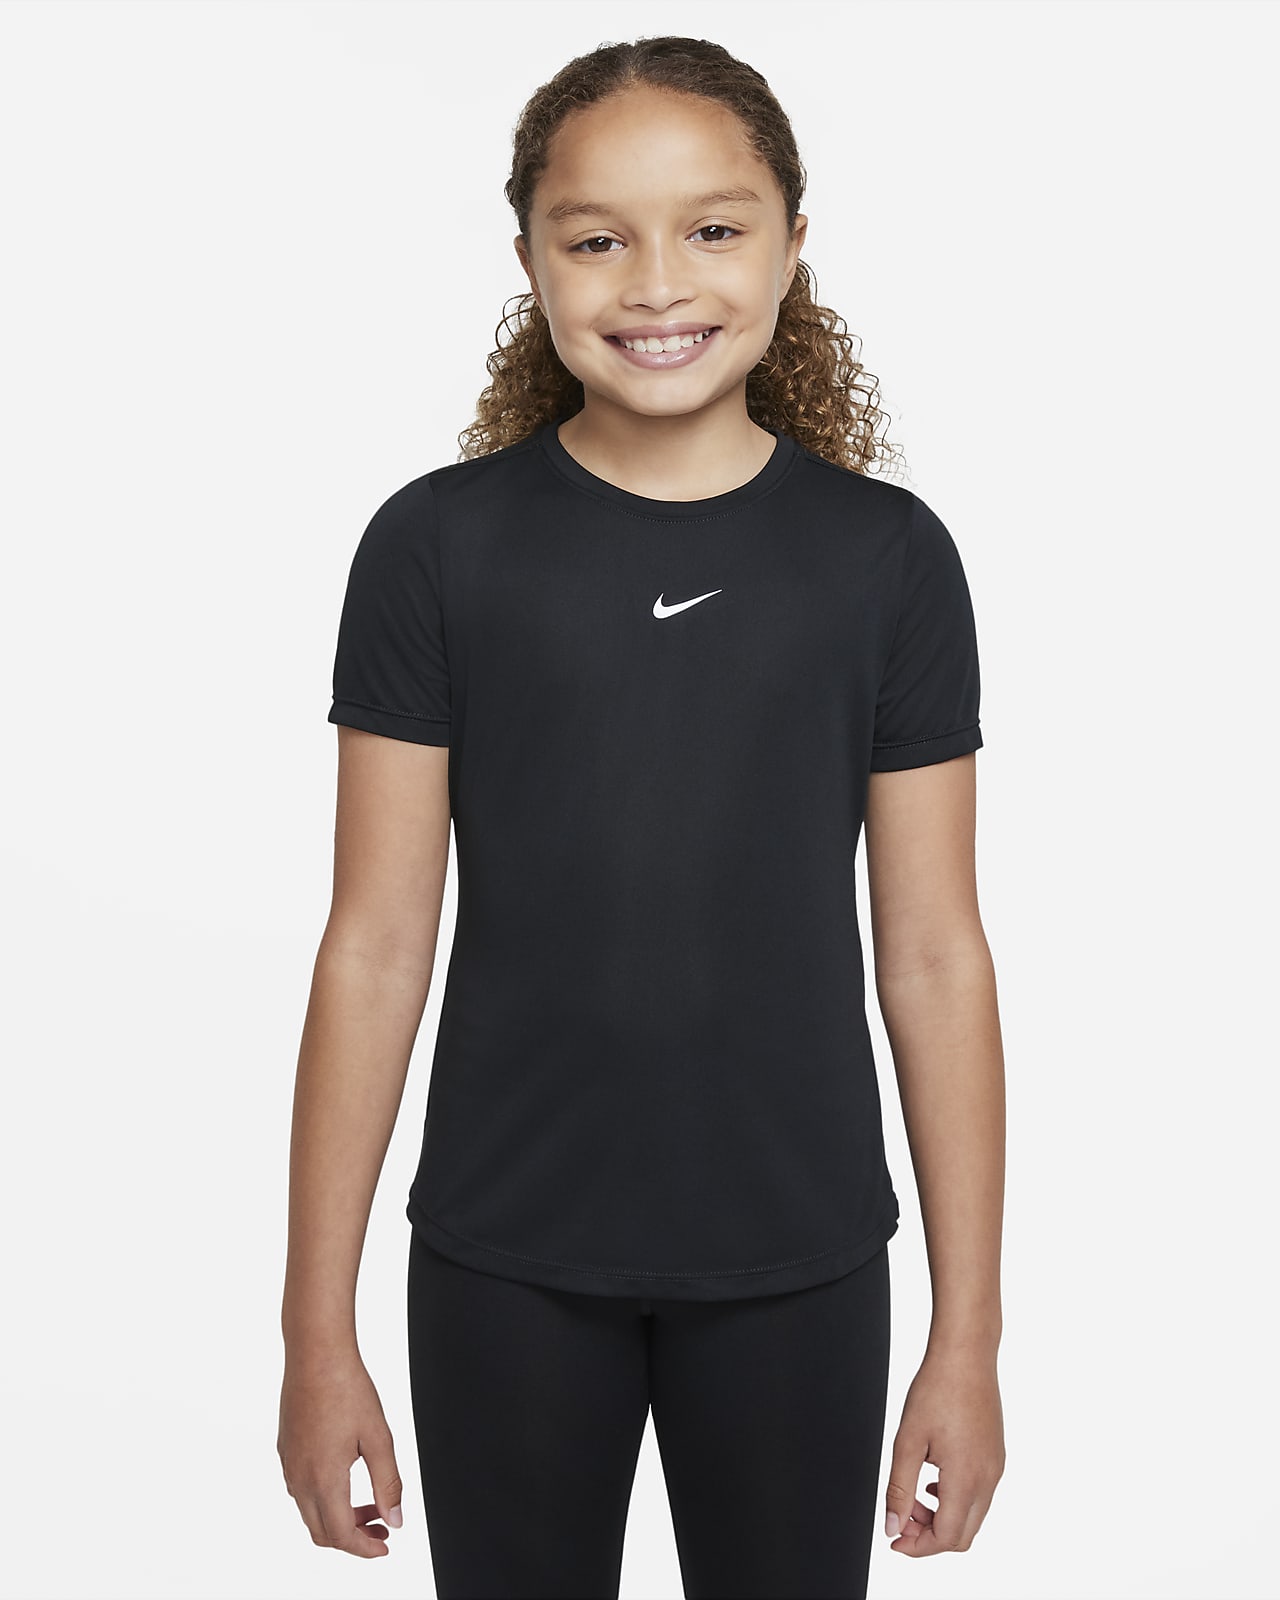 Kortärmad tröja Nike Dri-FIT One för ungdom (tjejer)